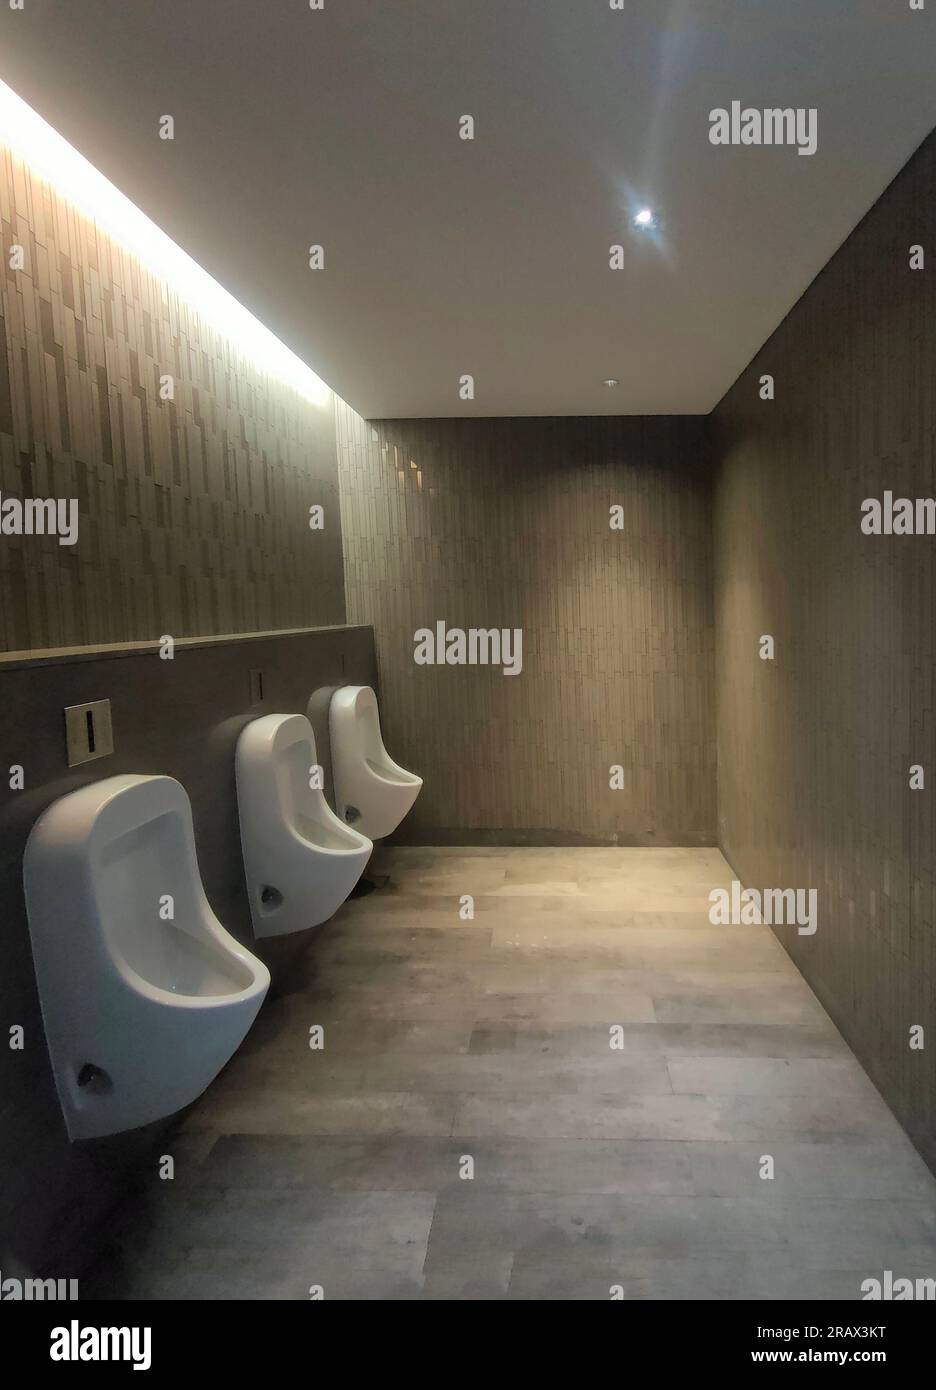 public toilets, public toilets in hotels Stock Photo